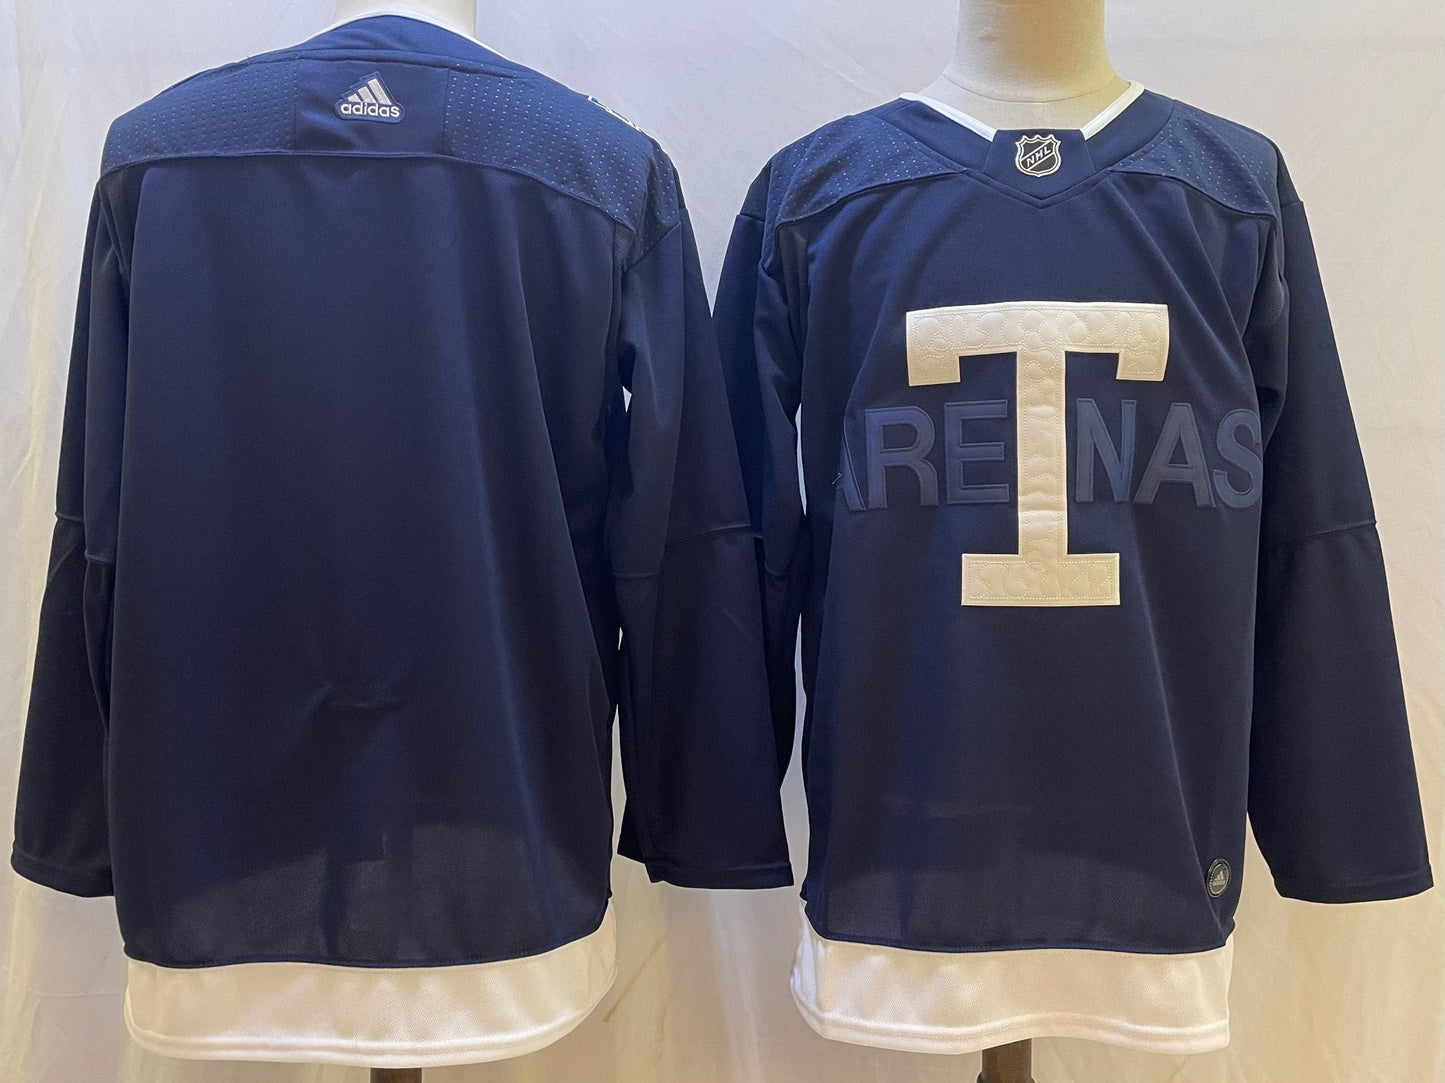 NHL Toronto Maple Leafs   Blank Version Jersey